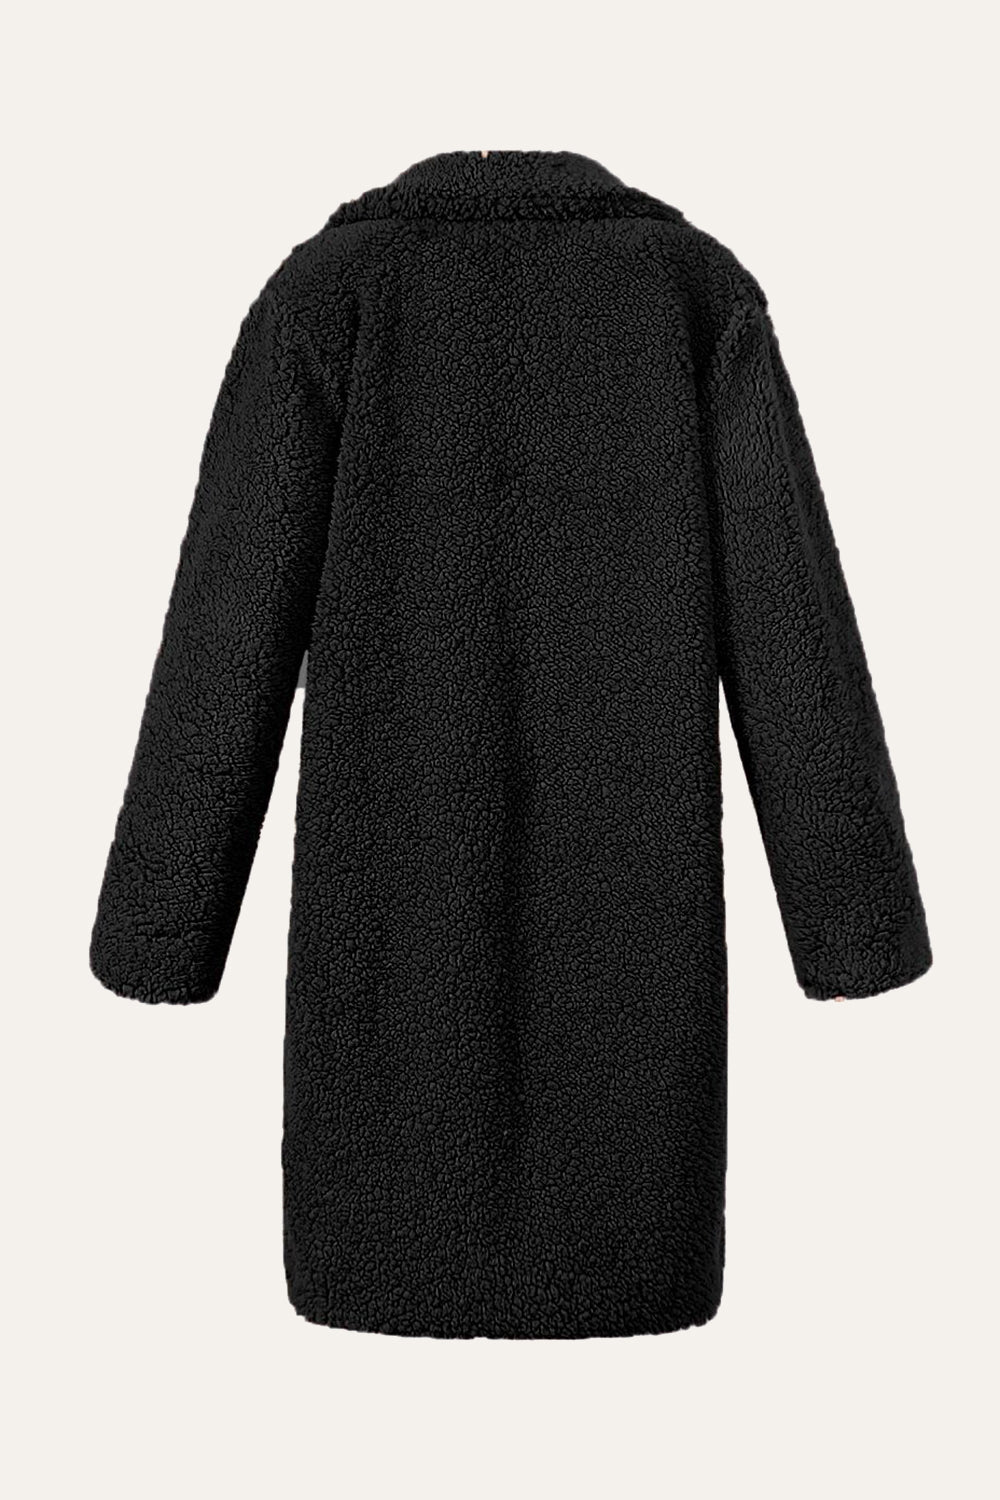 Black Notched Lapel Long Faux Fur Shearling Coat